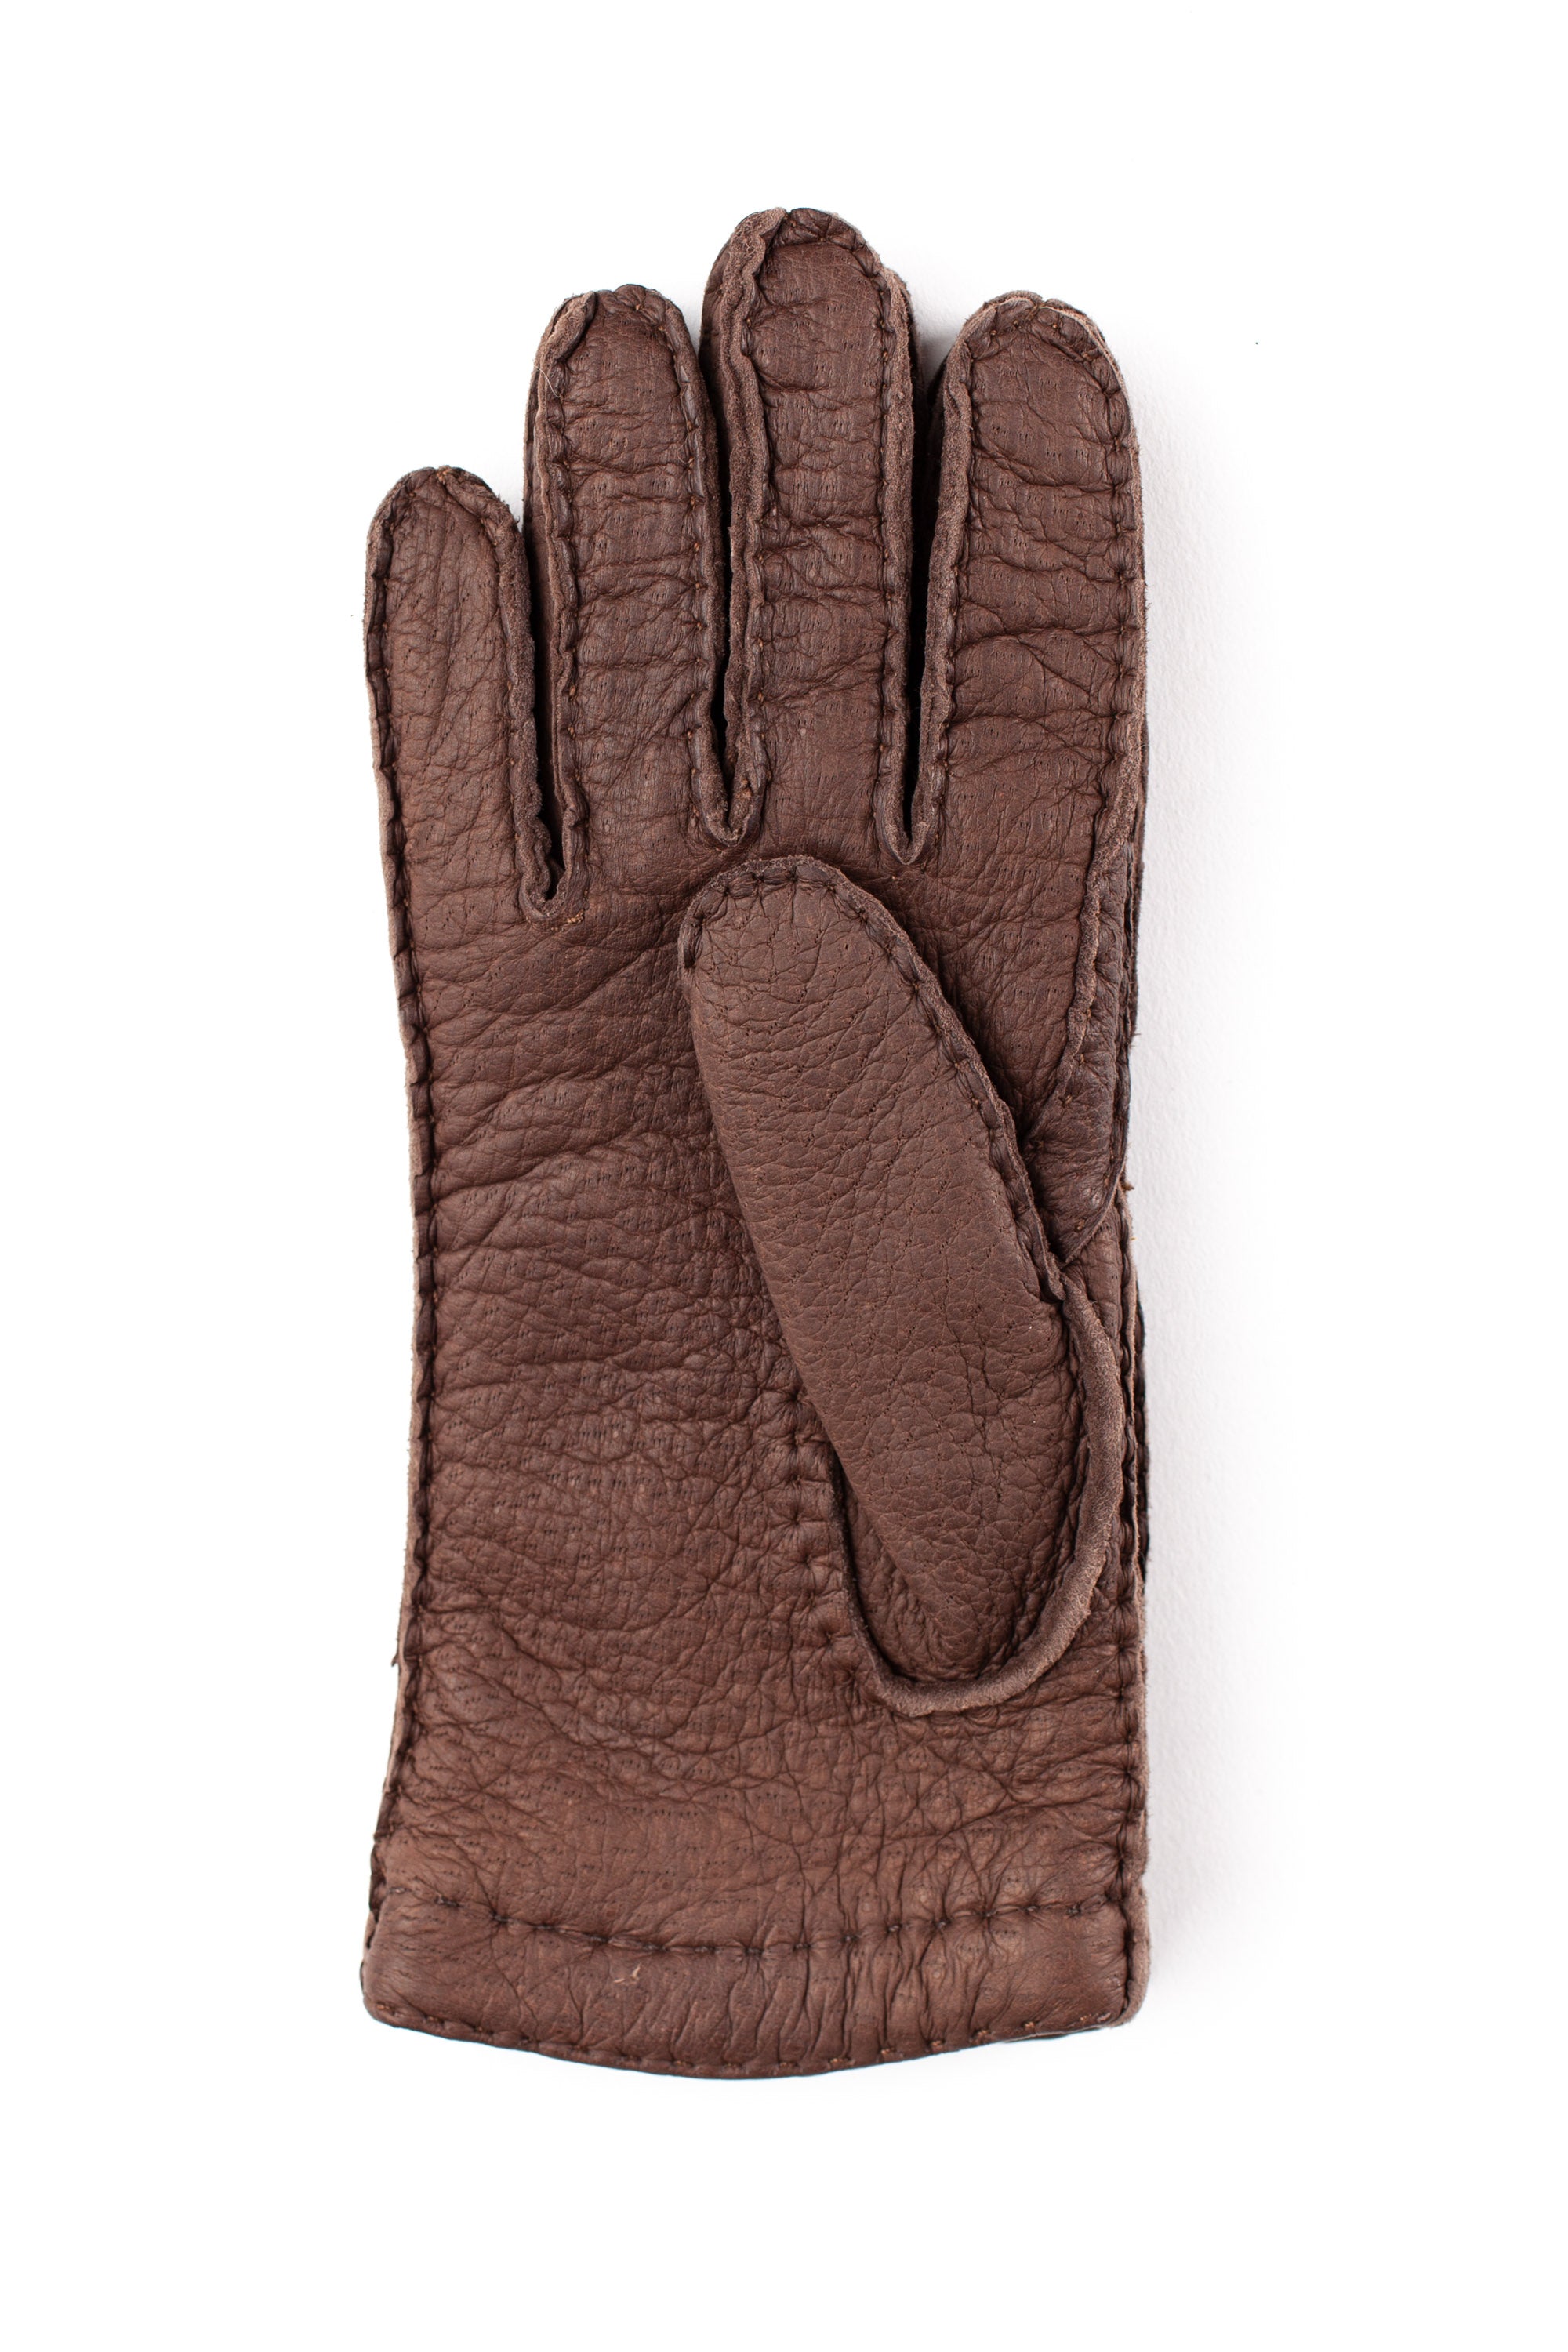 Peccary glove with cashmere interior